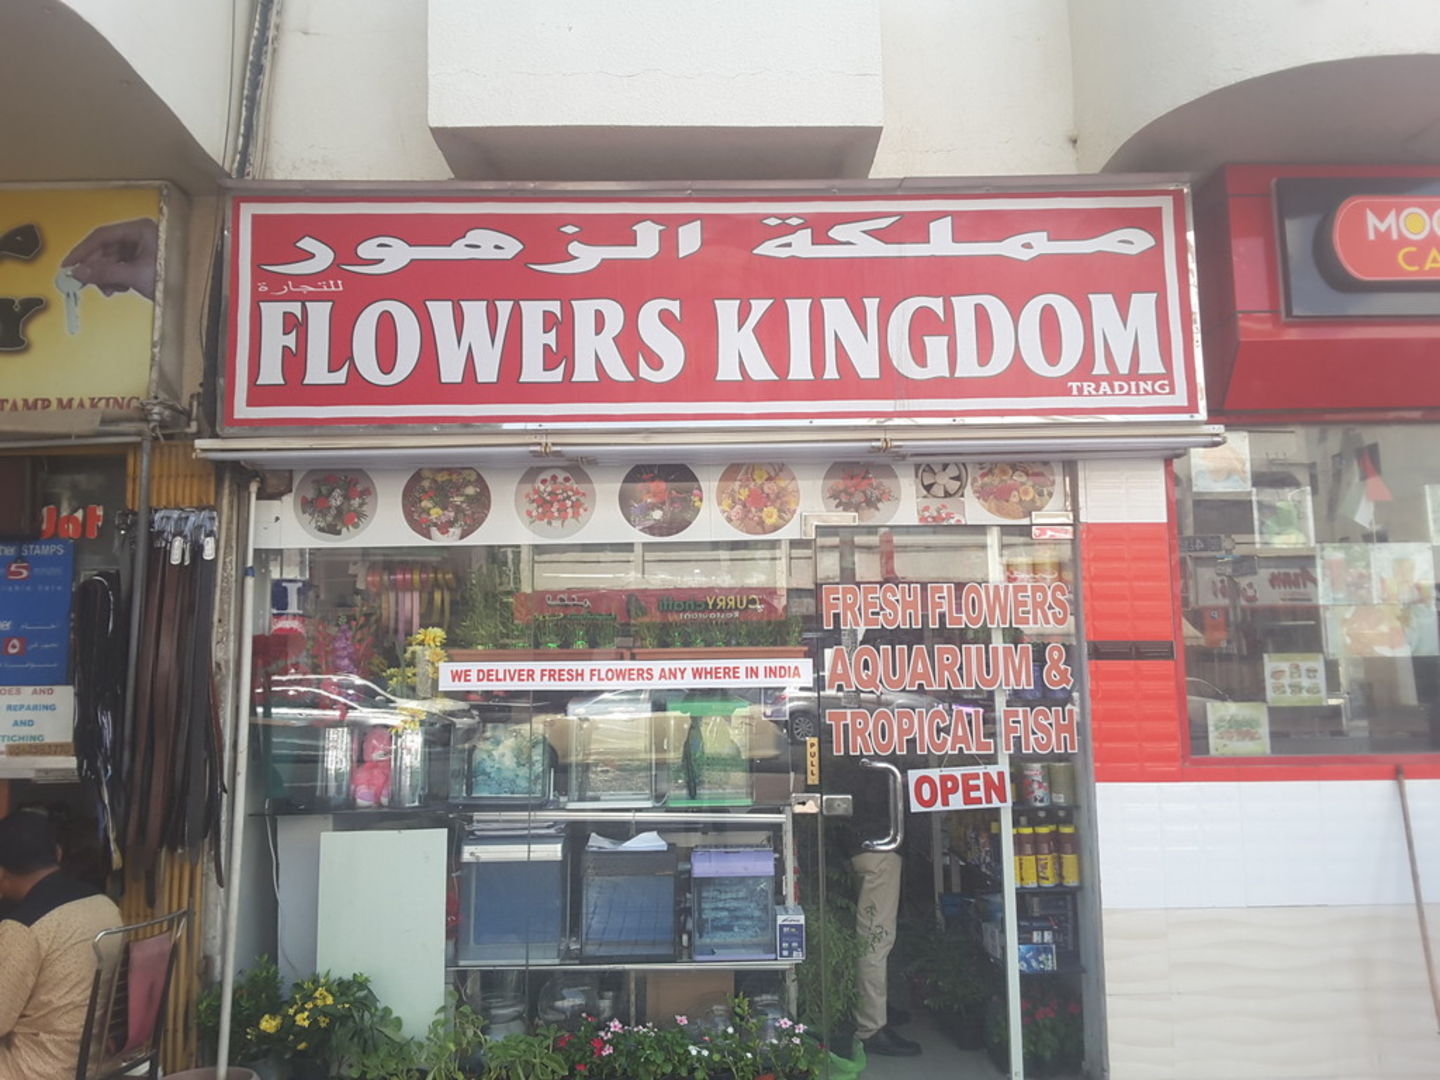 Flowers Kingdom Trading